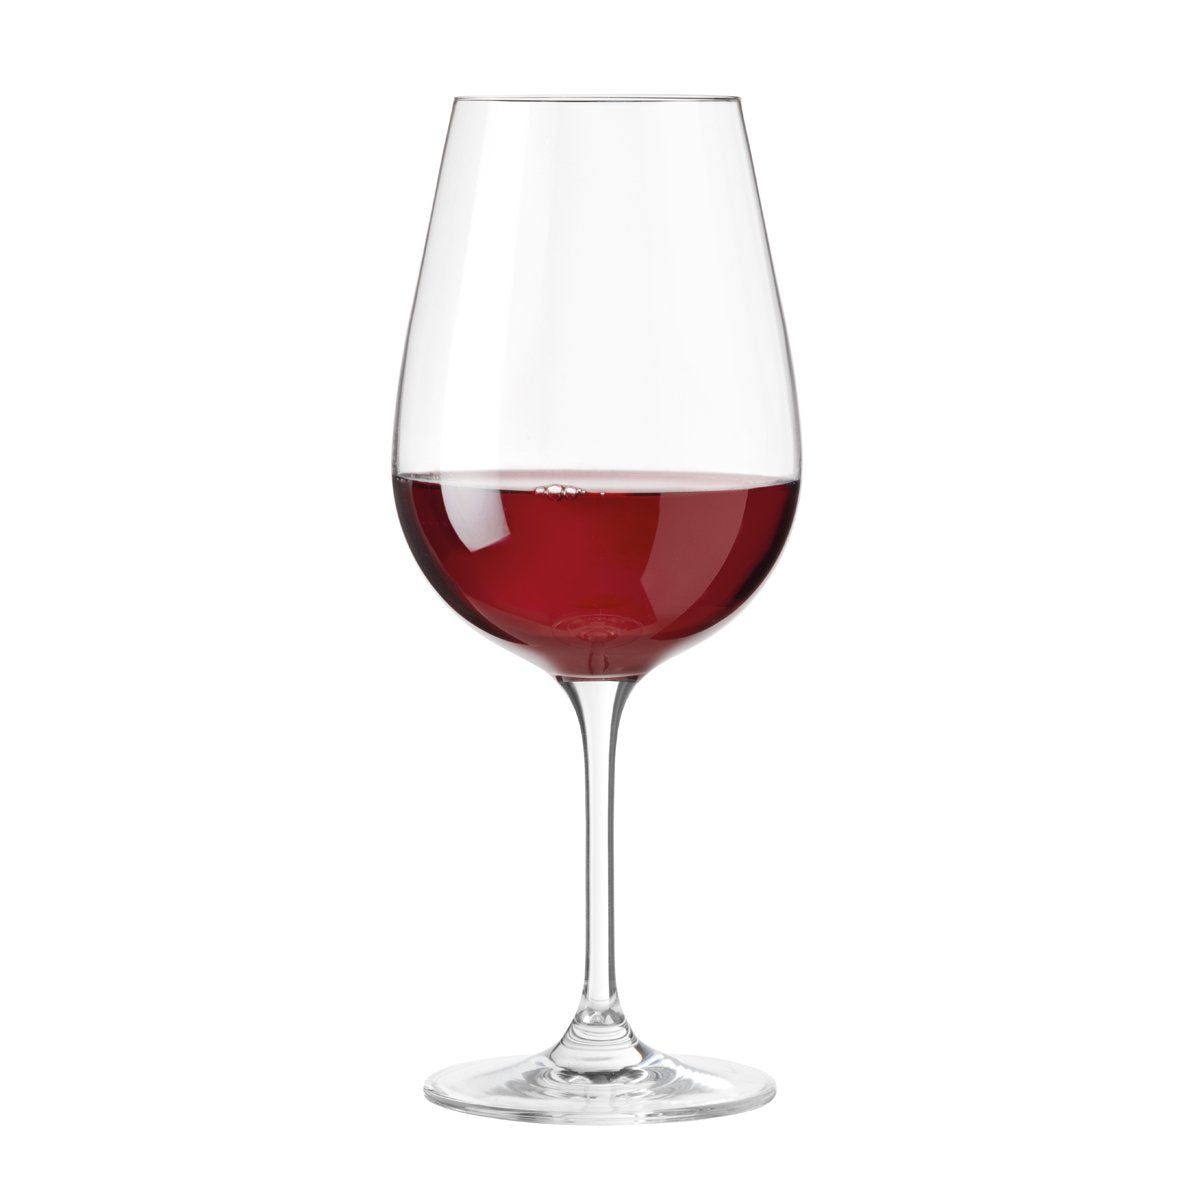 Leonardo TIVOLI Red Wine Glass Durable Teqton Glass Large 700ml - Set of 6